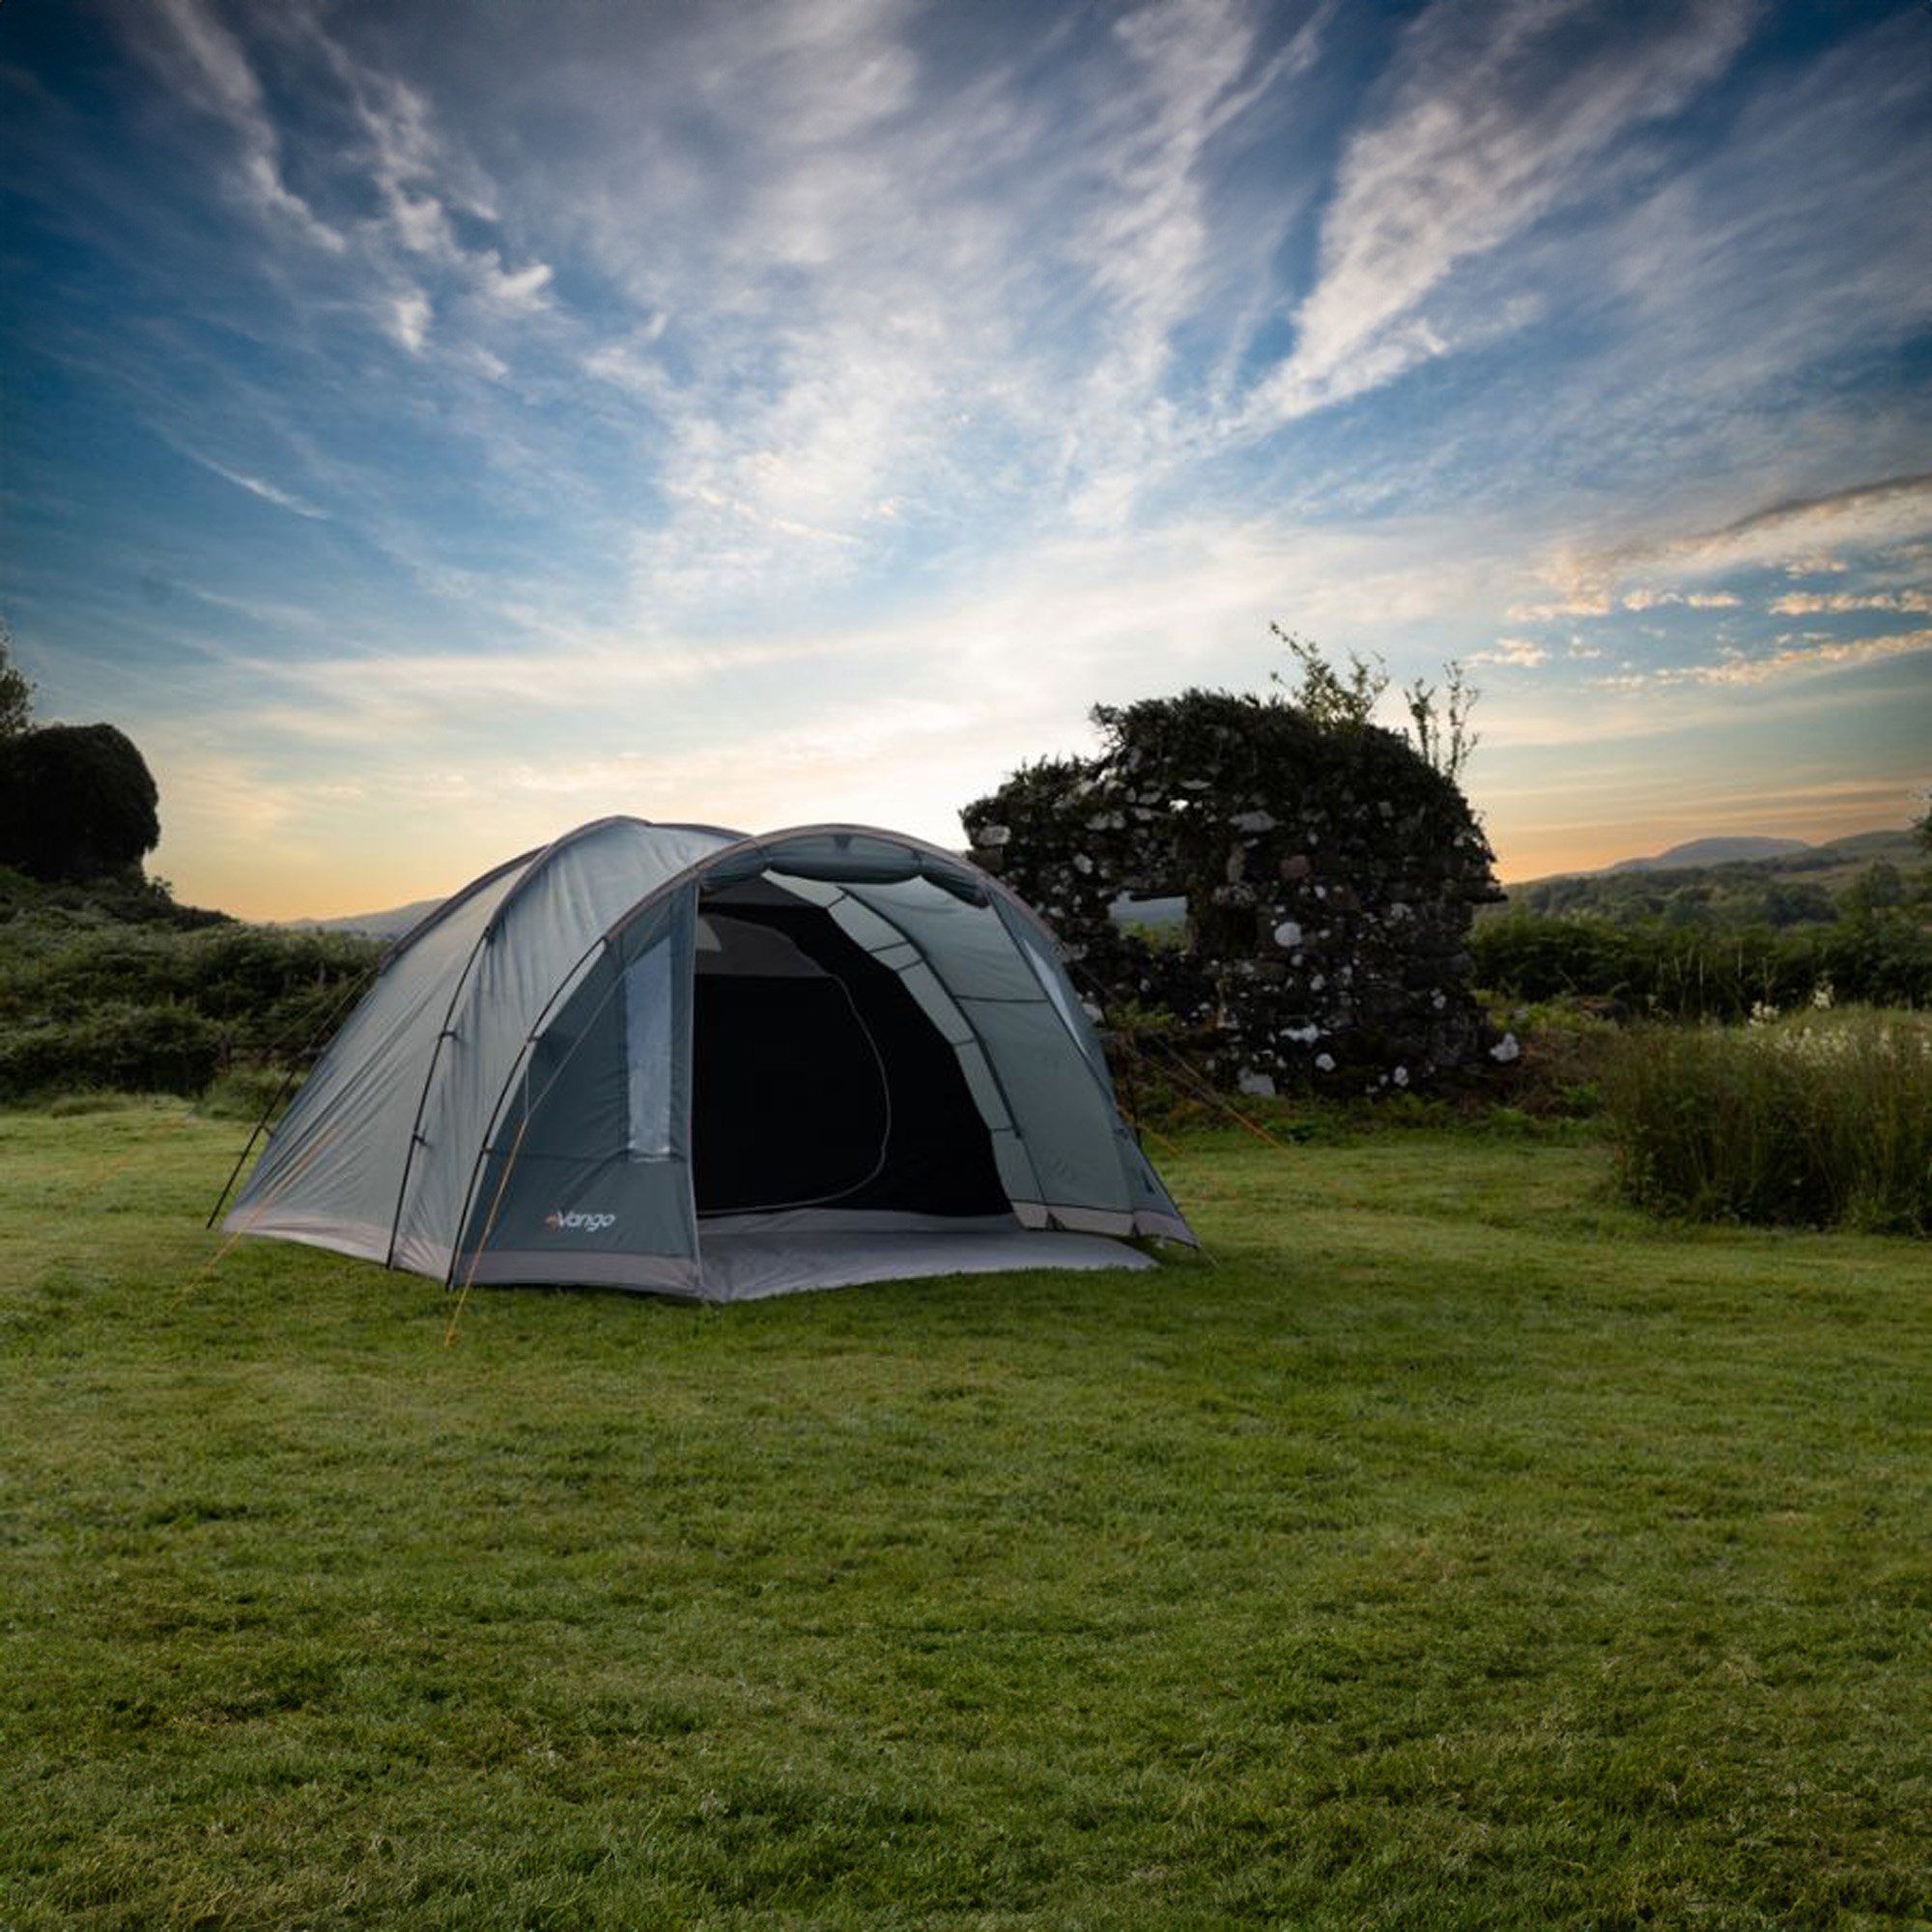 Vango Cragmor 400 Family Camping Tent